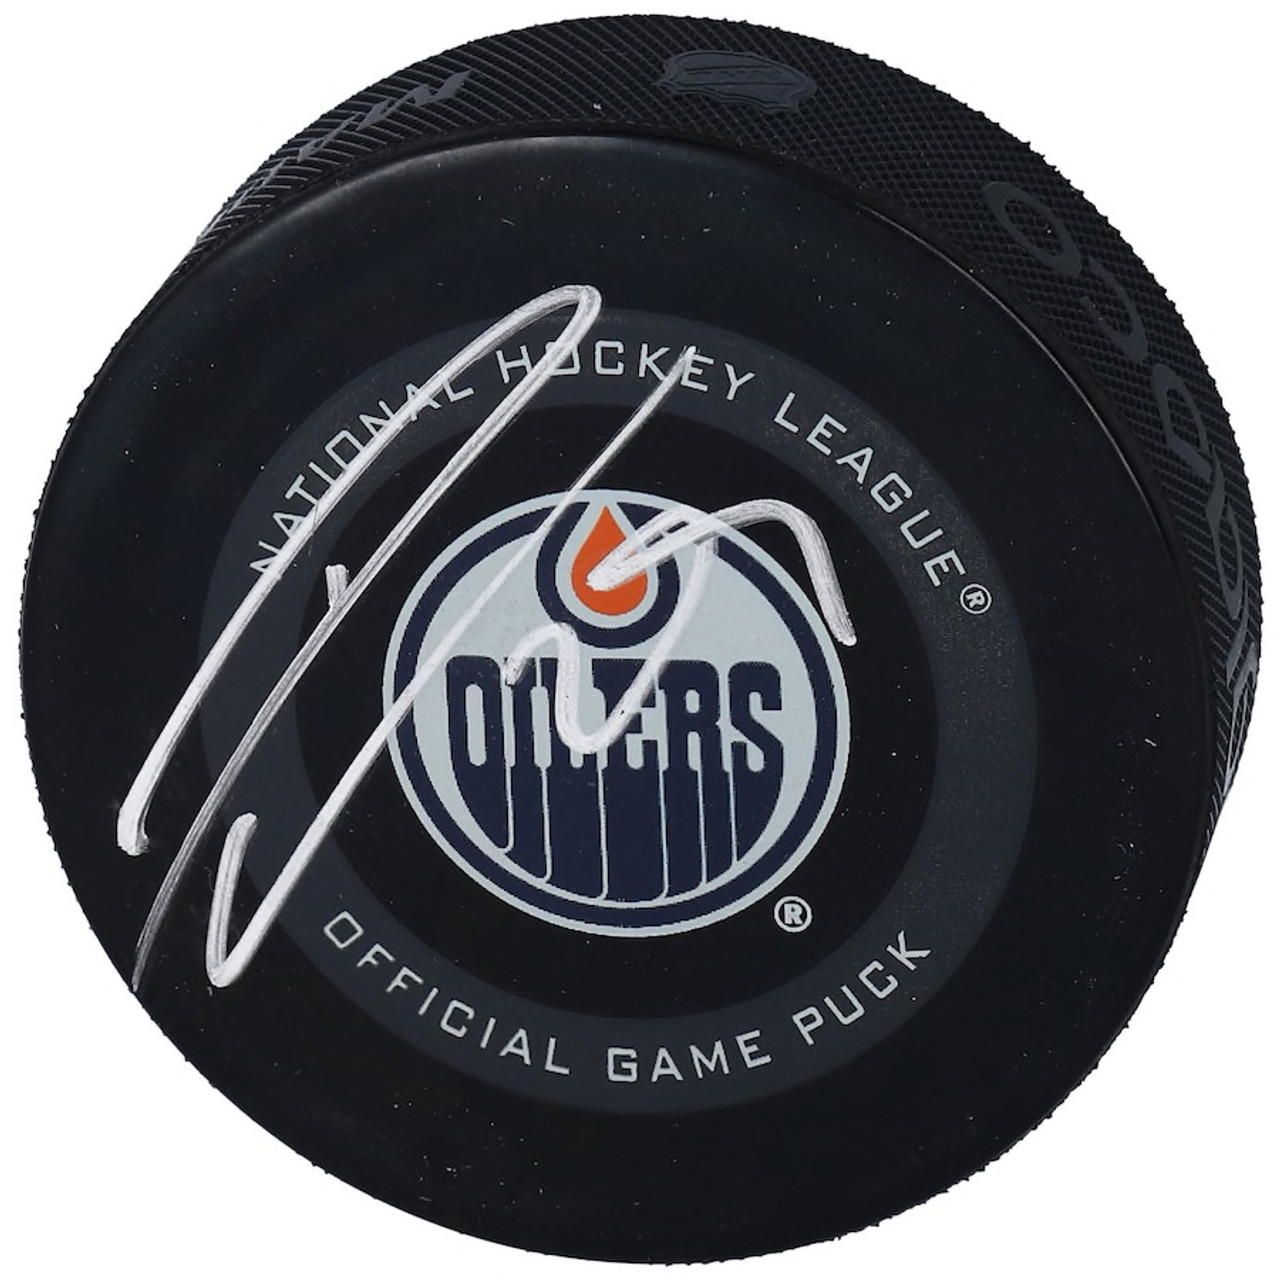 LEON DRAISAITL Autographed Edmonton Oilers Adidas Authentic Jersey FANATICS  - Game Day Legends